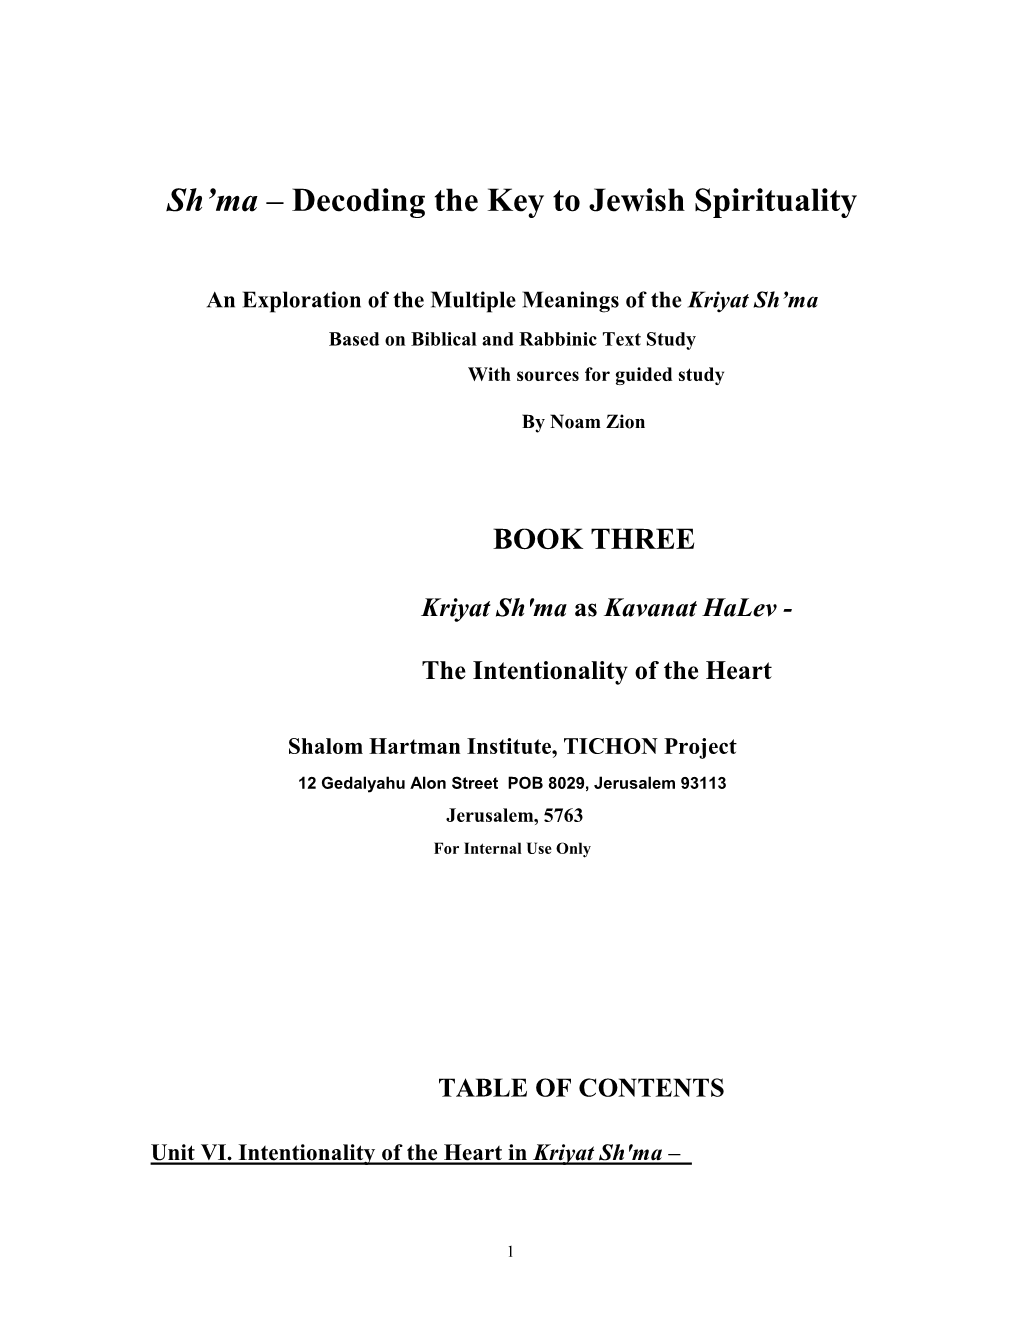 Decoding the Key to Jewish Spirituality